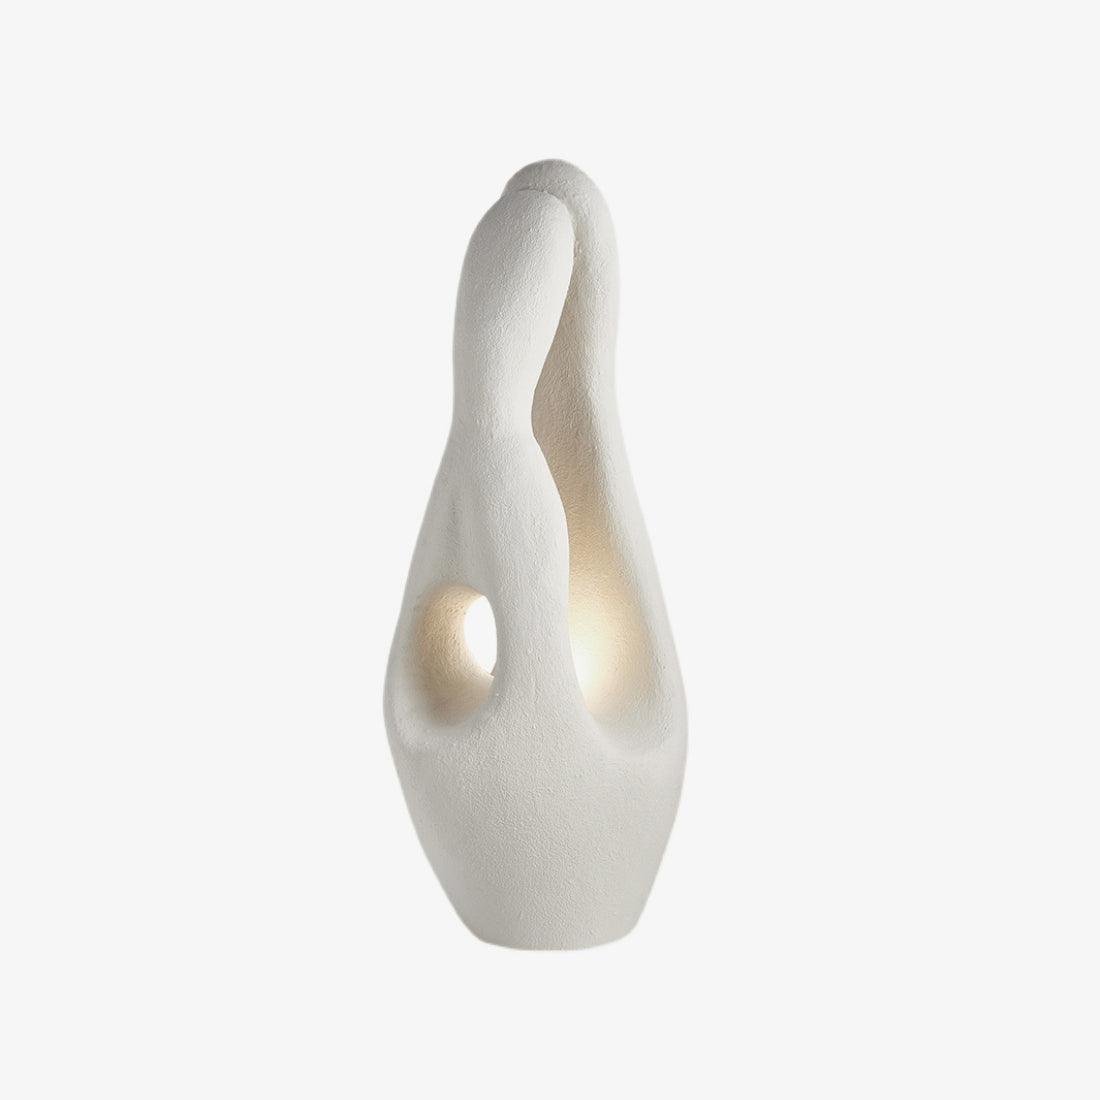 Fertility Form Floor Lamp in White with EU Plug, Dimensions: ∅ 19.7″ x H 52″ (50cm x 132cm)